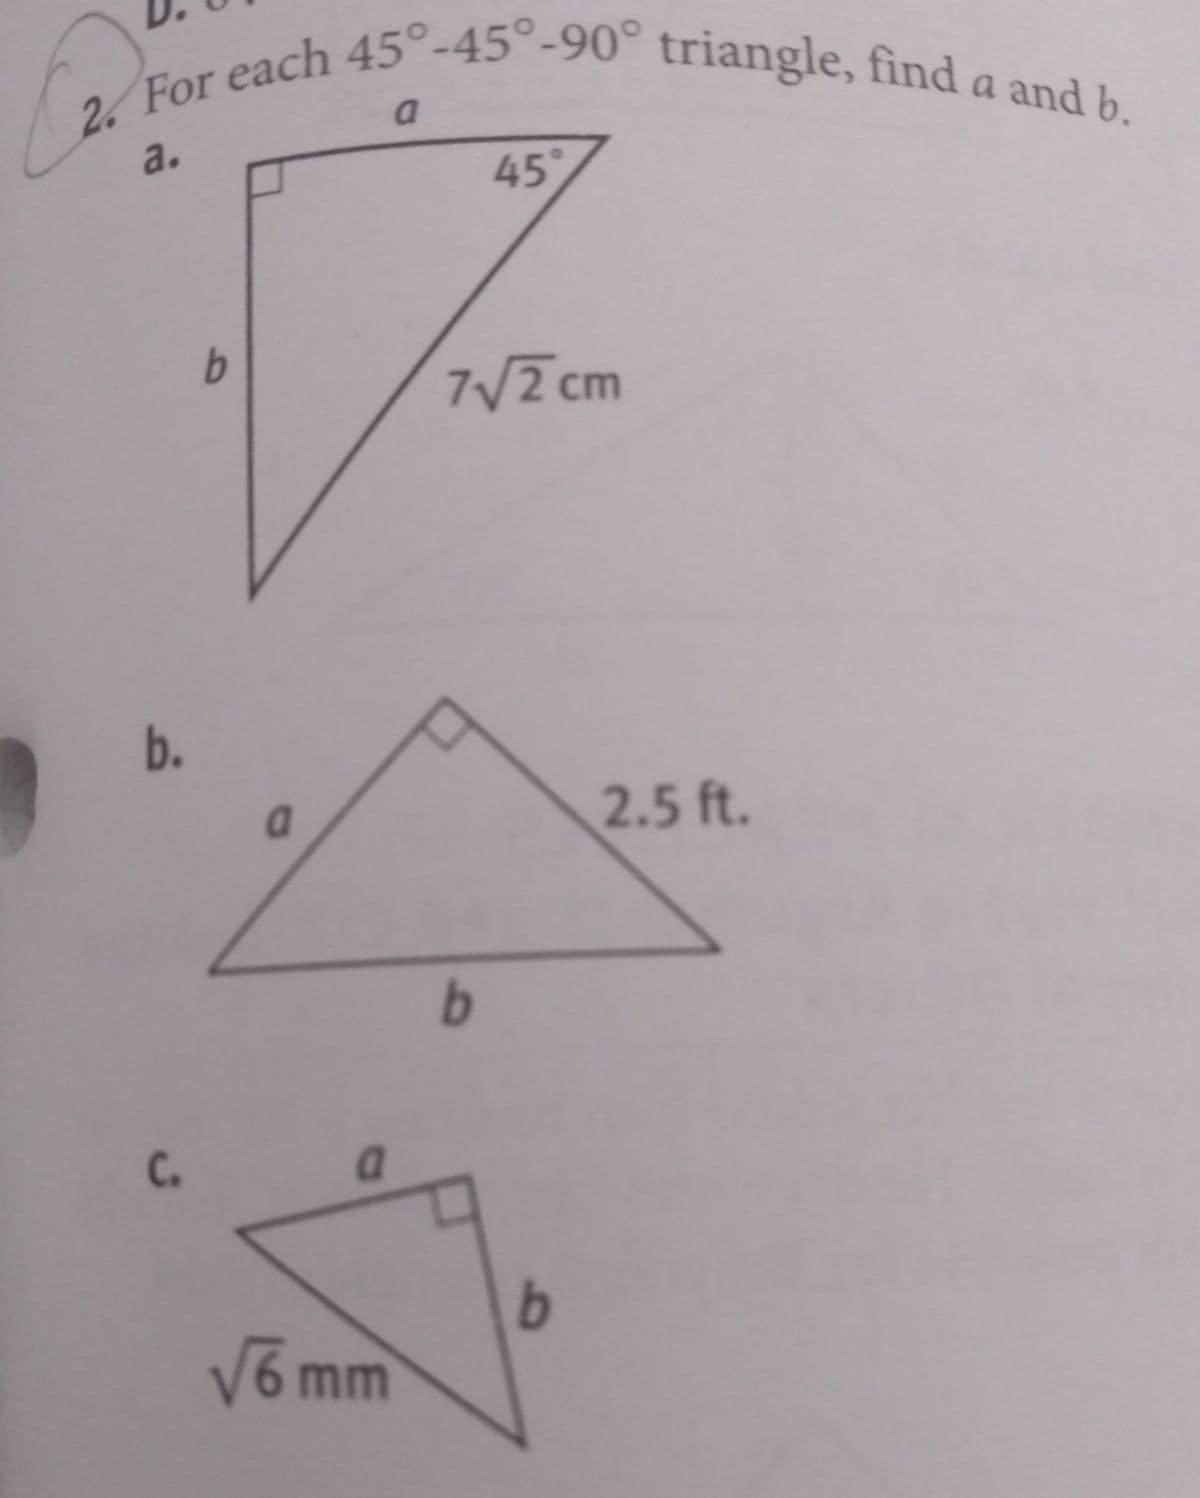 2. For each 45°-45°-90° triangle, find a and b.
a
a.
45°
7/2 cm
b.
2.5 ft.
C.
b
V6 mm
